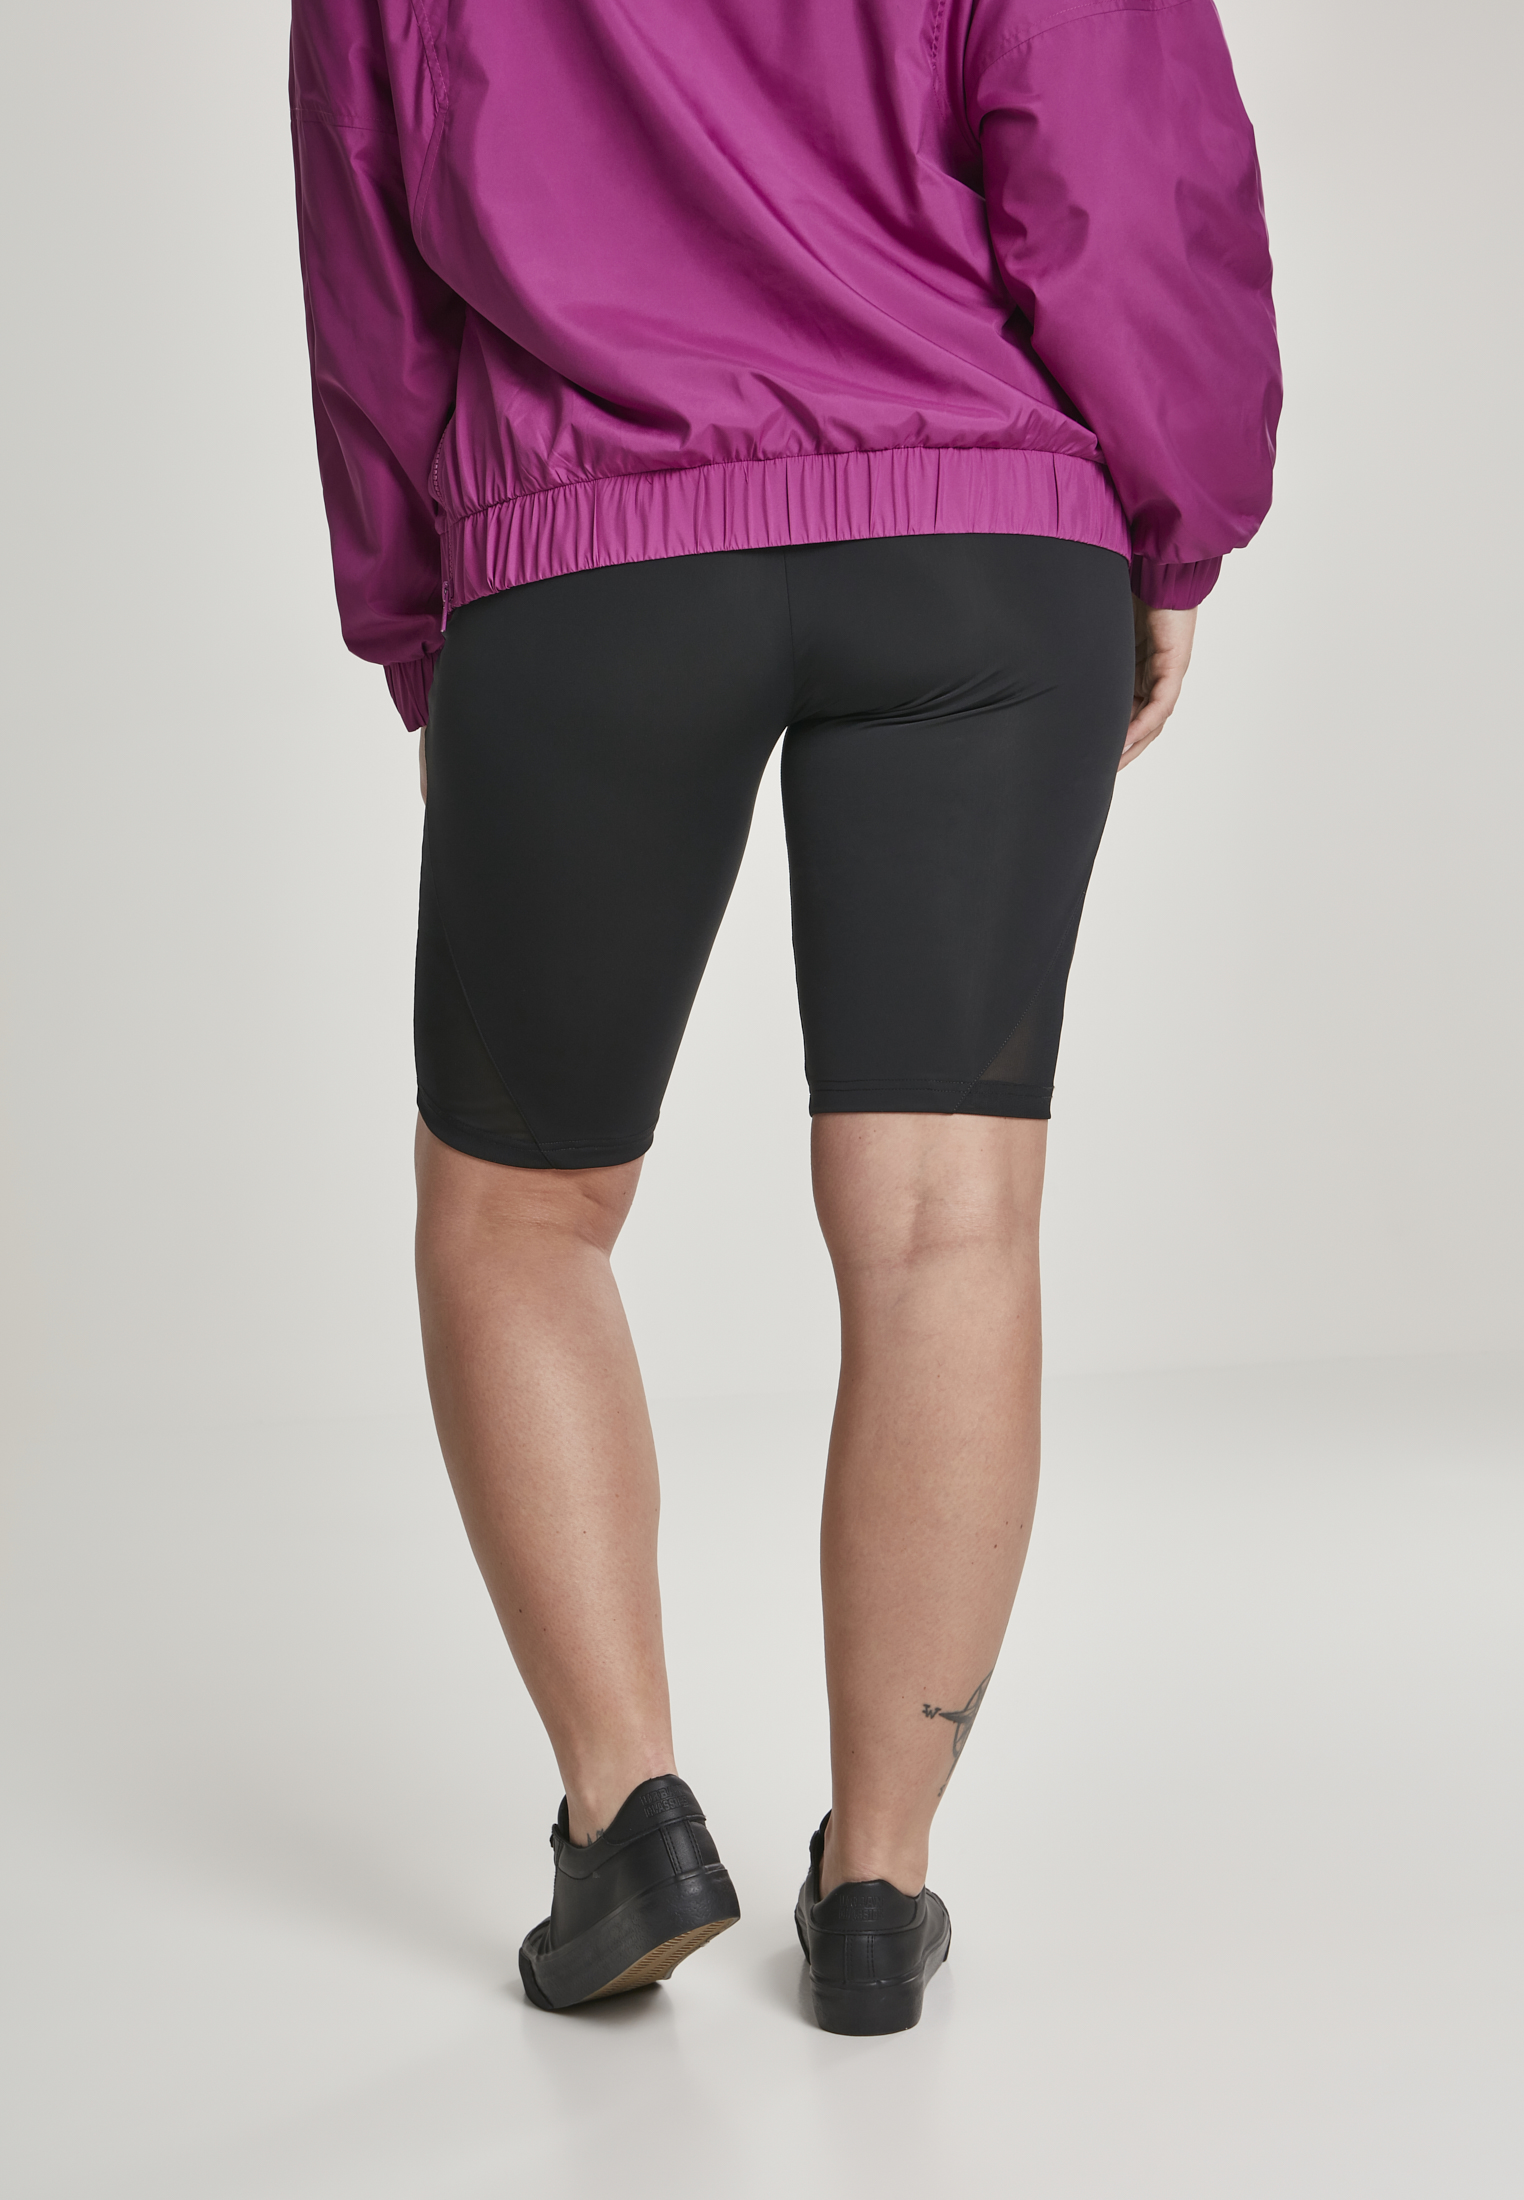 Curvy Ladies Tech Mesh Cycle Shorts in Farbe black